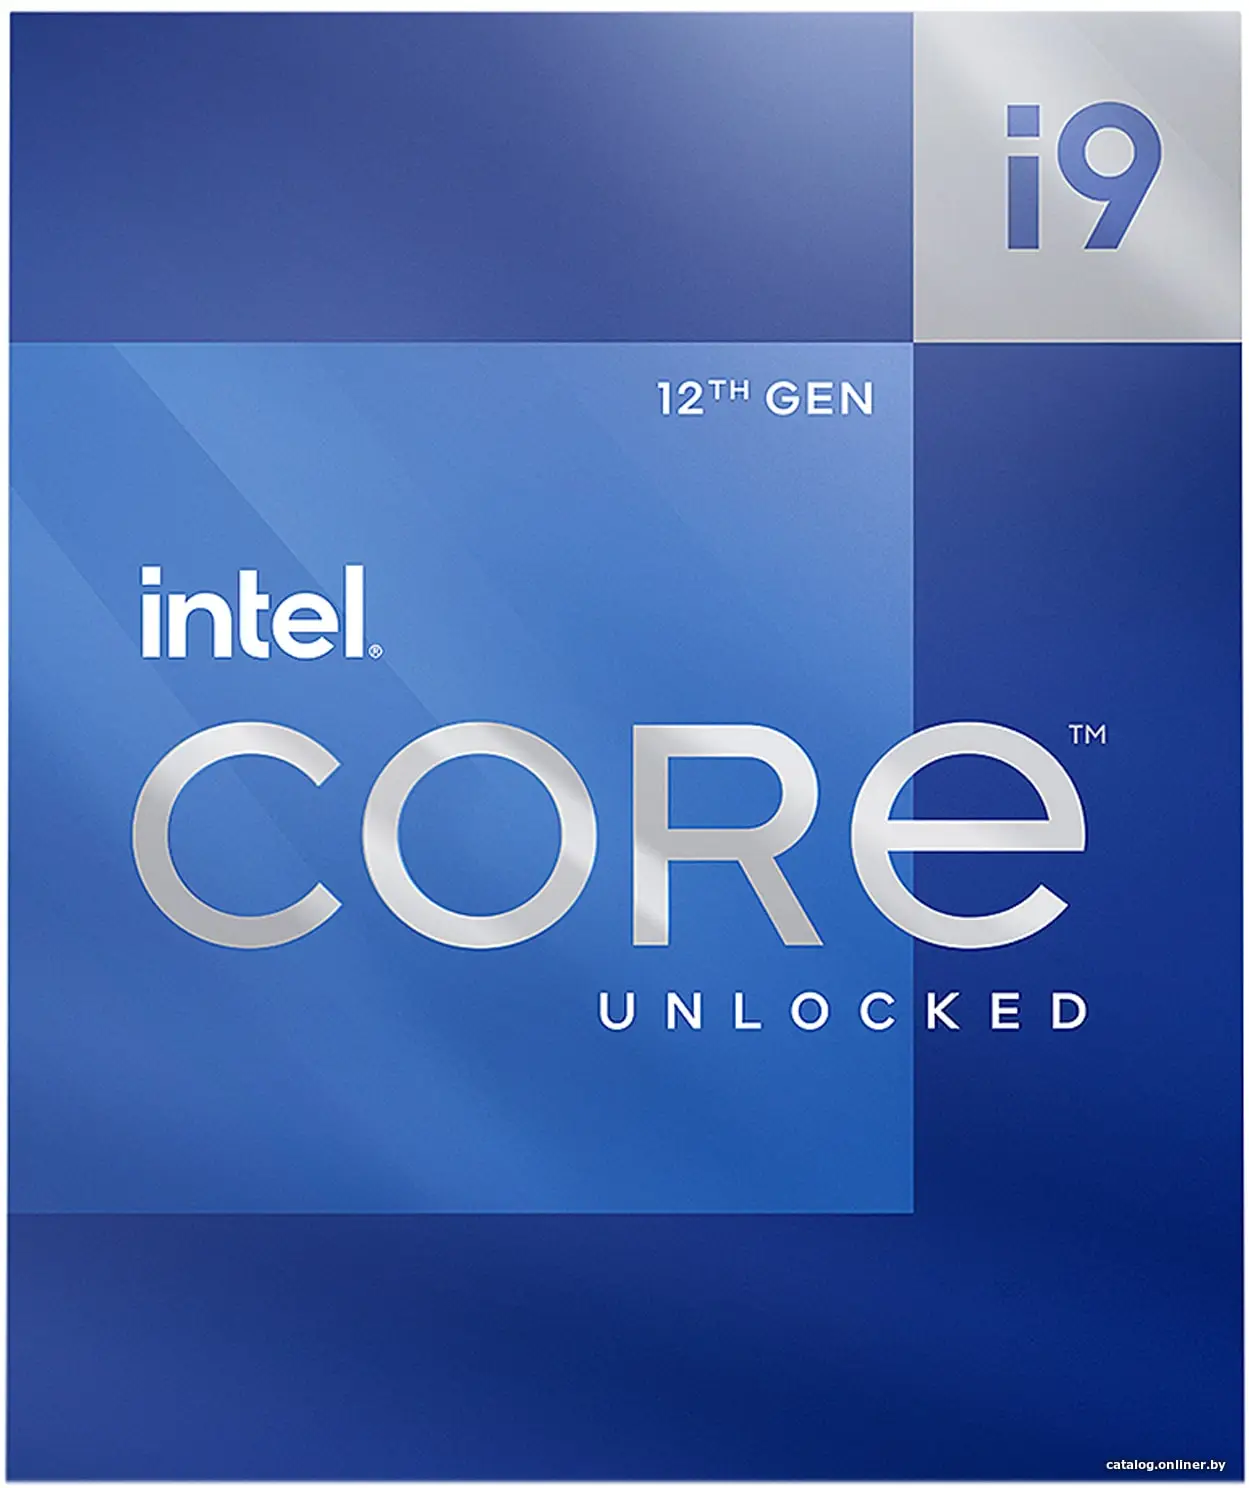 Купить Процессор Intel Core i9-12900K, цена, опт и розница